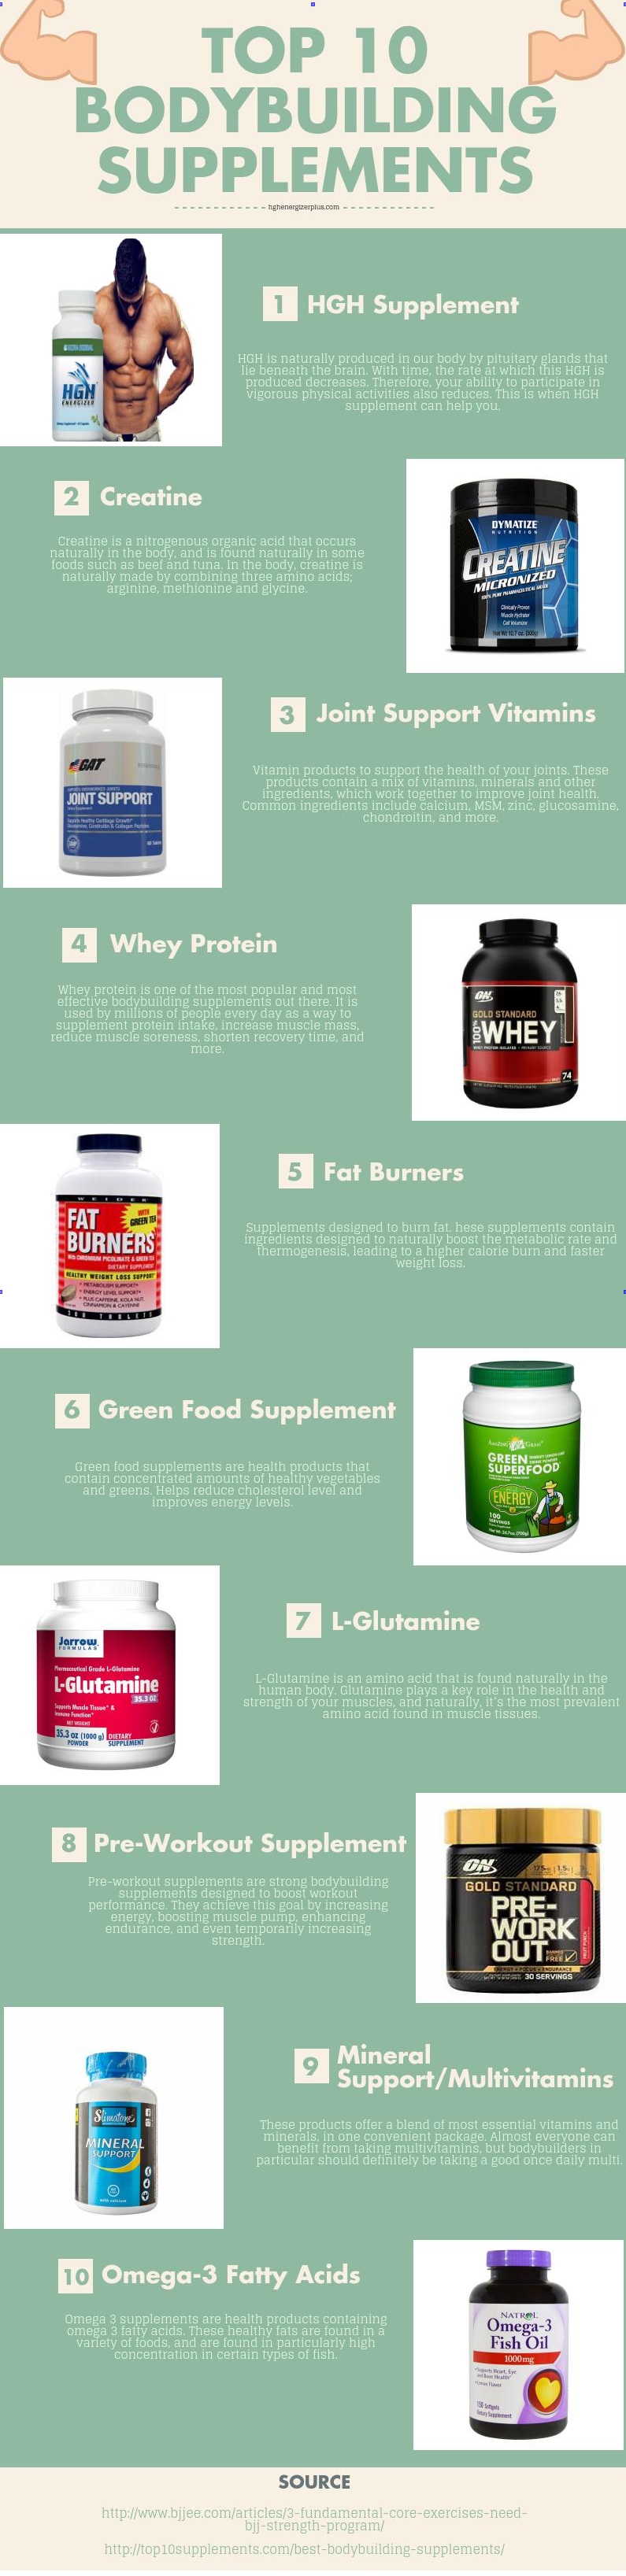 Top 10 Bodybuilding Supplements Infographic Hghenergizer